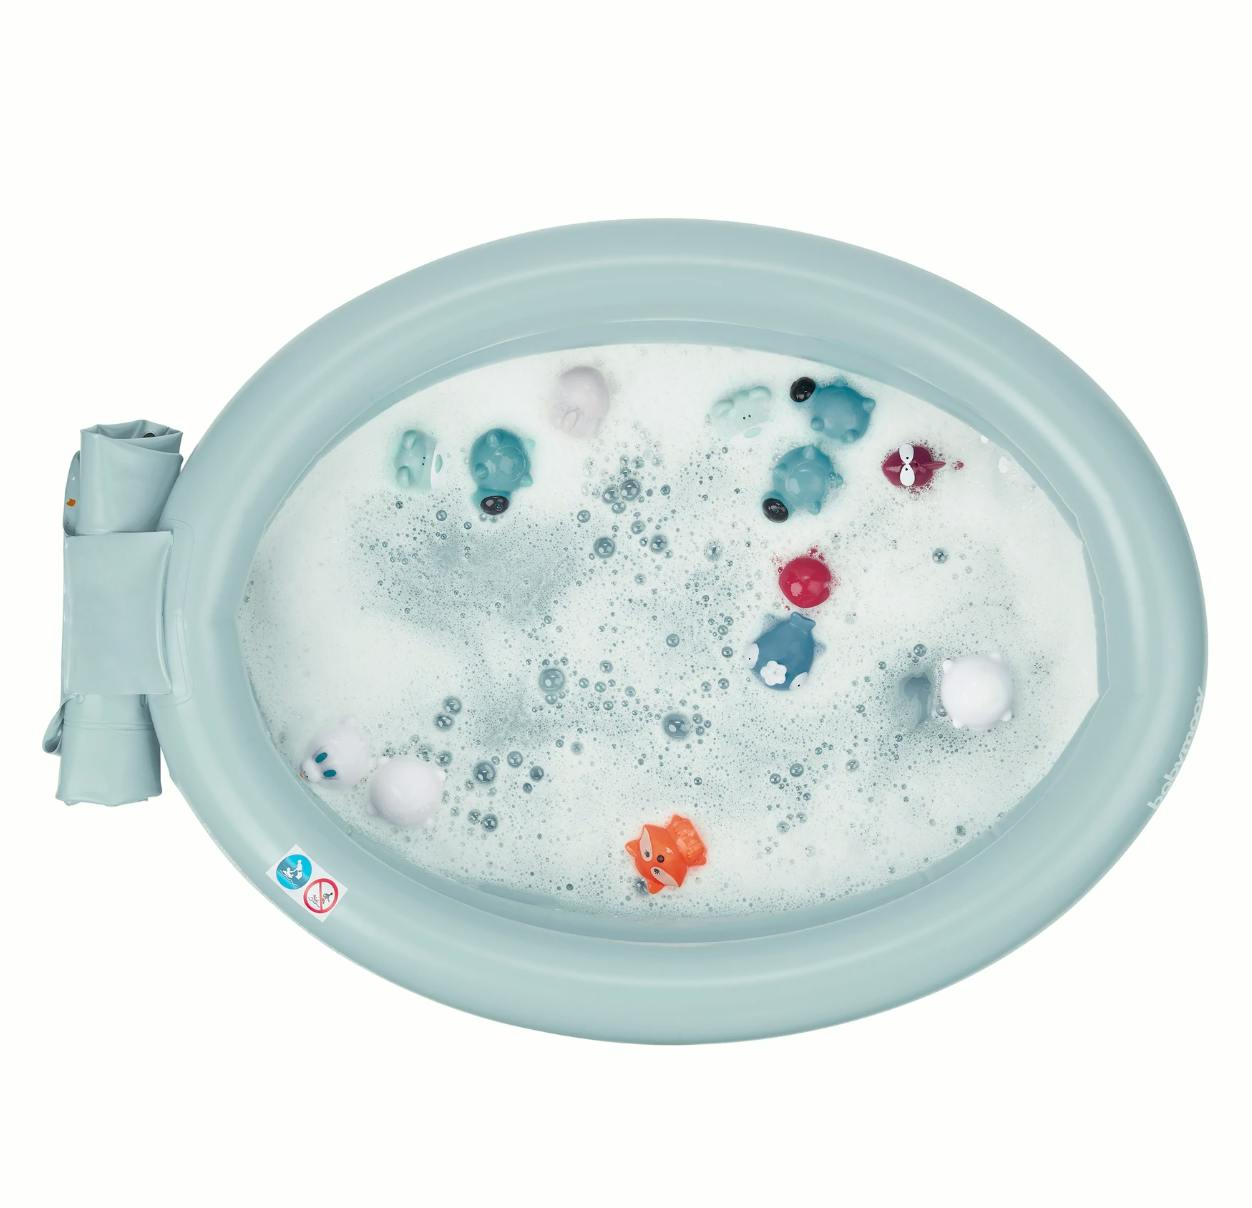 Babymoov Inflatable Bath Tub